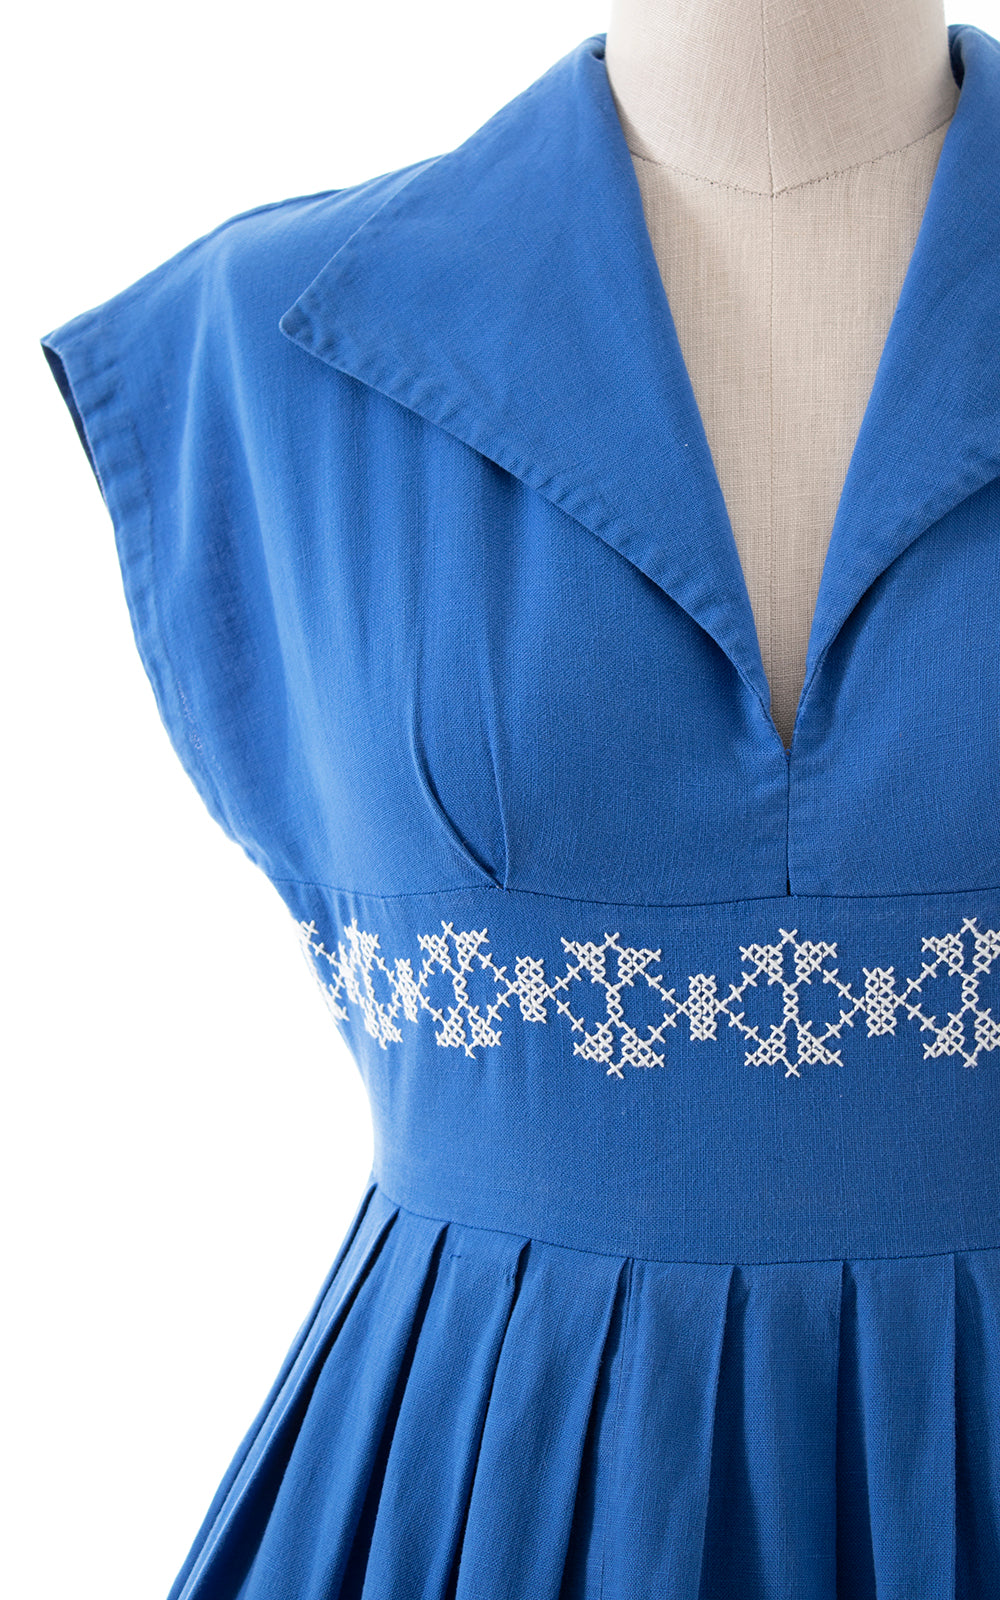 1950s Cross-Stitch Border Cotton Dress | large/x-large